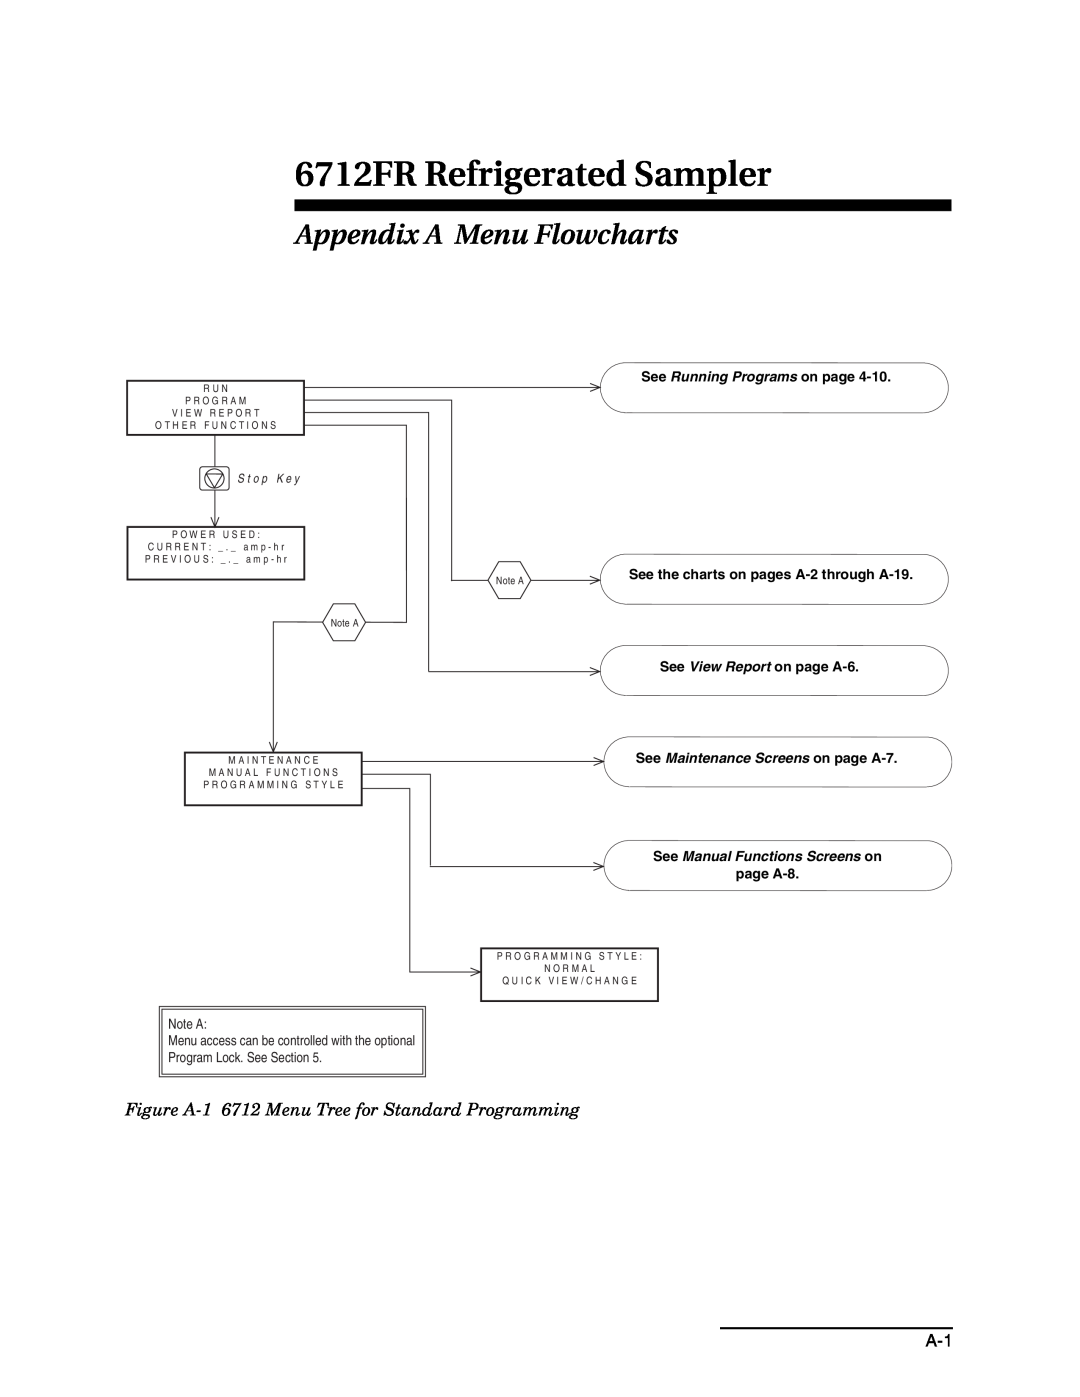 Teledyne Appendix A Menu Flowcharts, 6712FR Refrigerated Sampler, Figure A-1 6712 Menu Tree for Standard Programming 